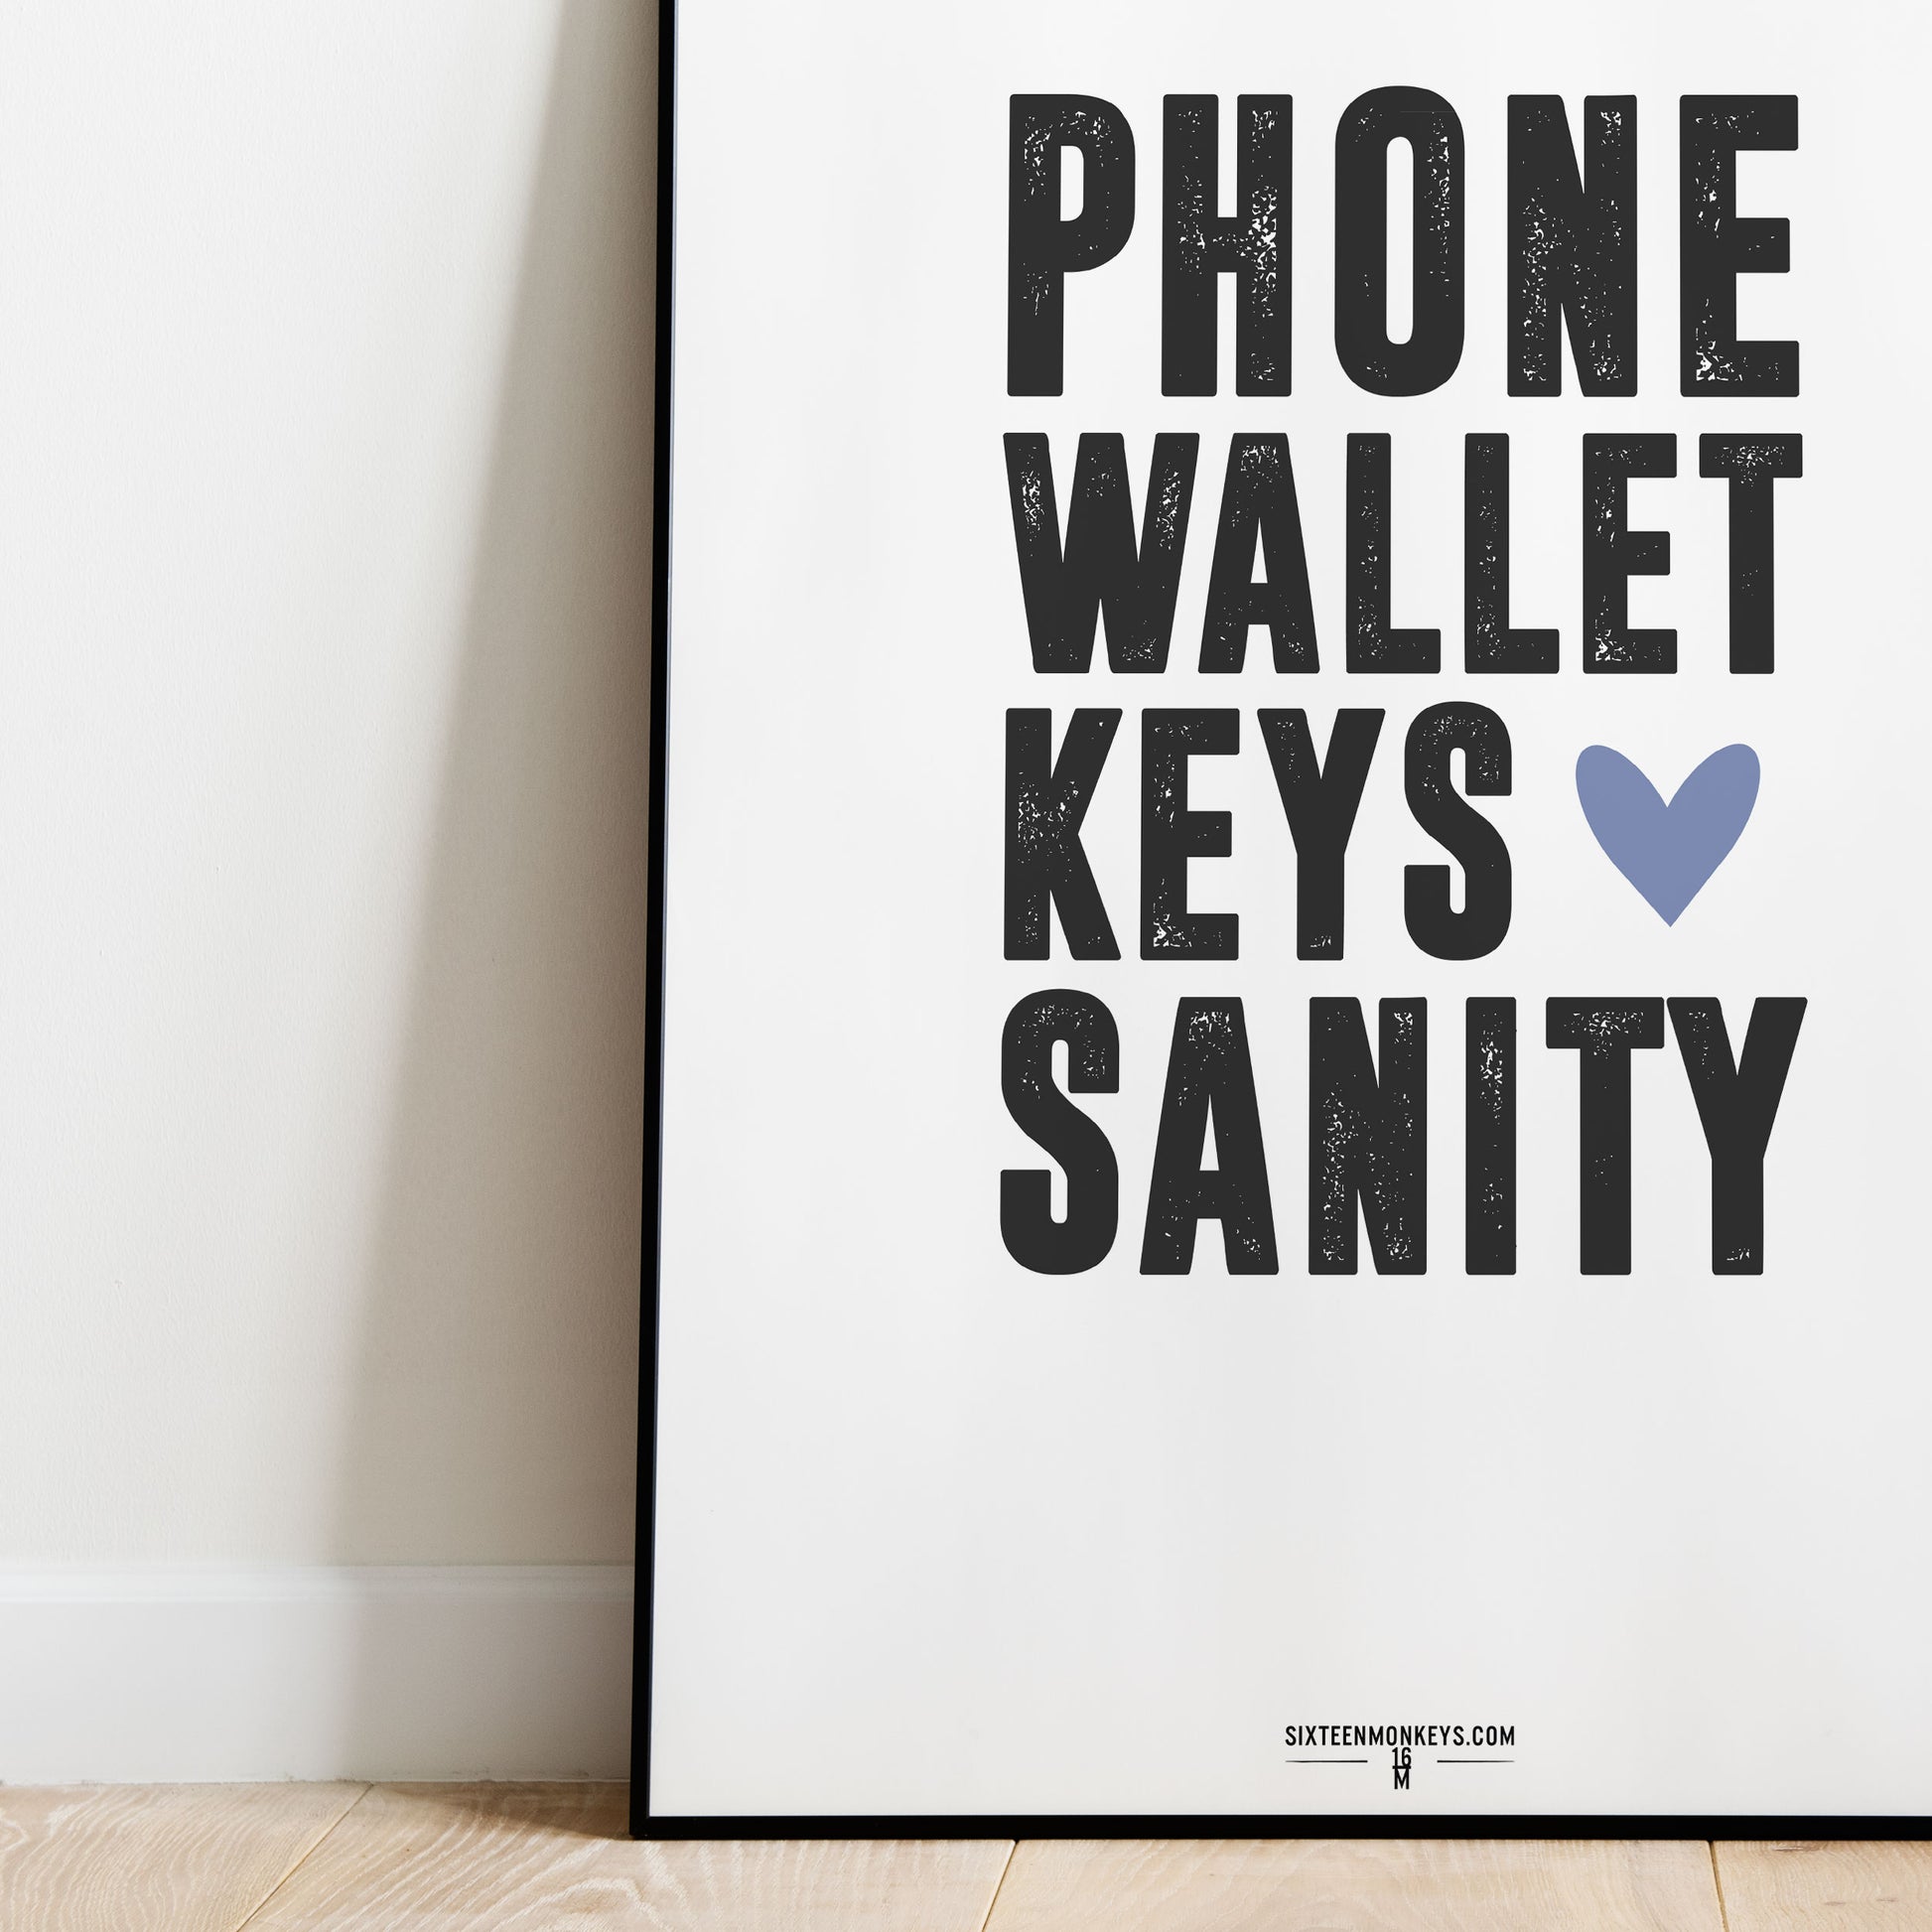 ‘Phone Wallet Keys Sanity’ Art Print